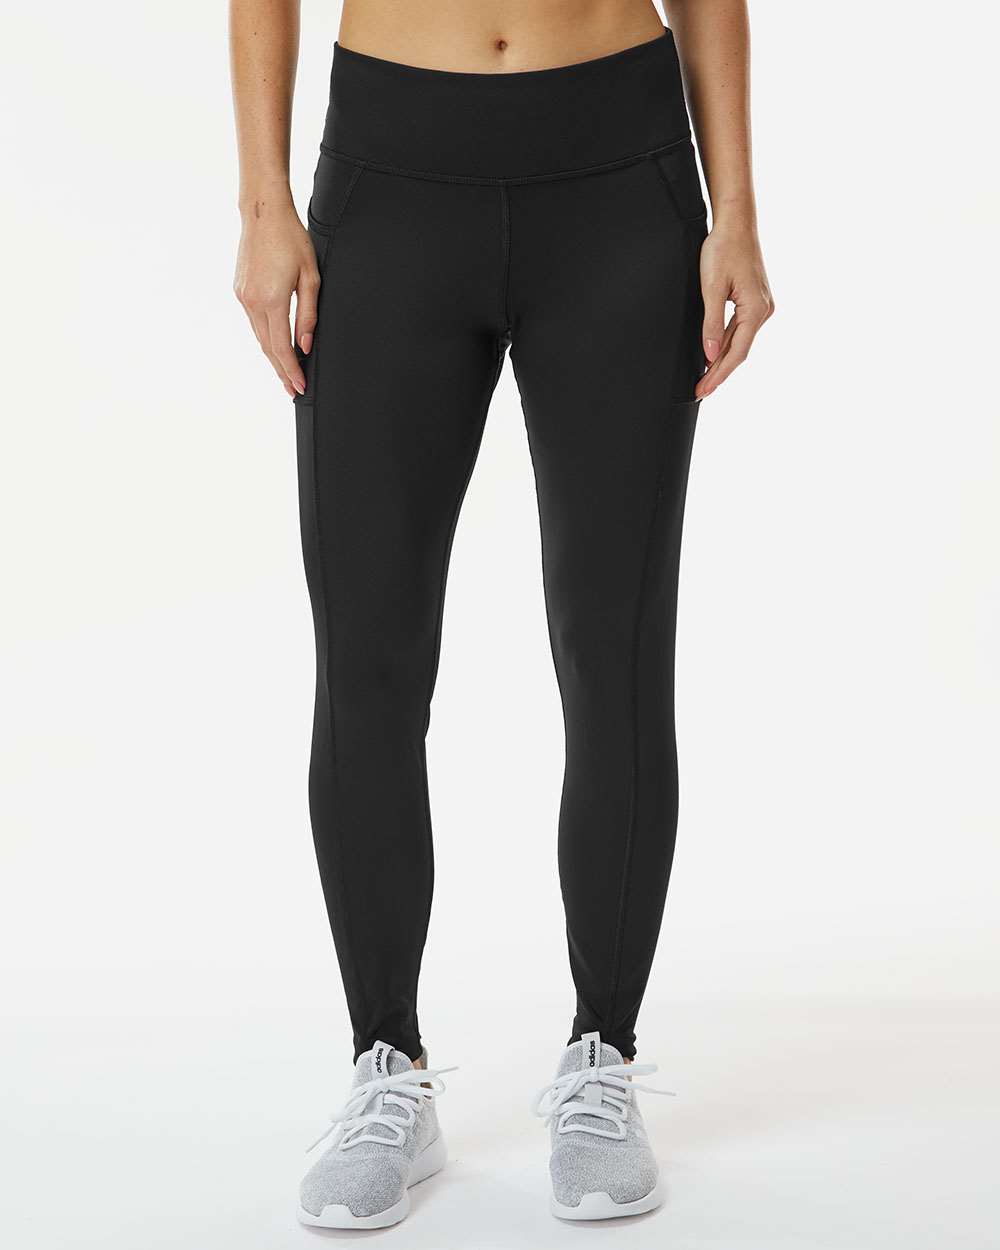 women's size medium athletic pants capris - clothing & accessories - by  owner - apparel sale - craigslist